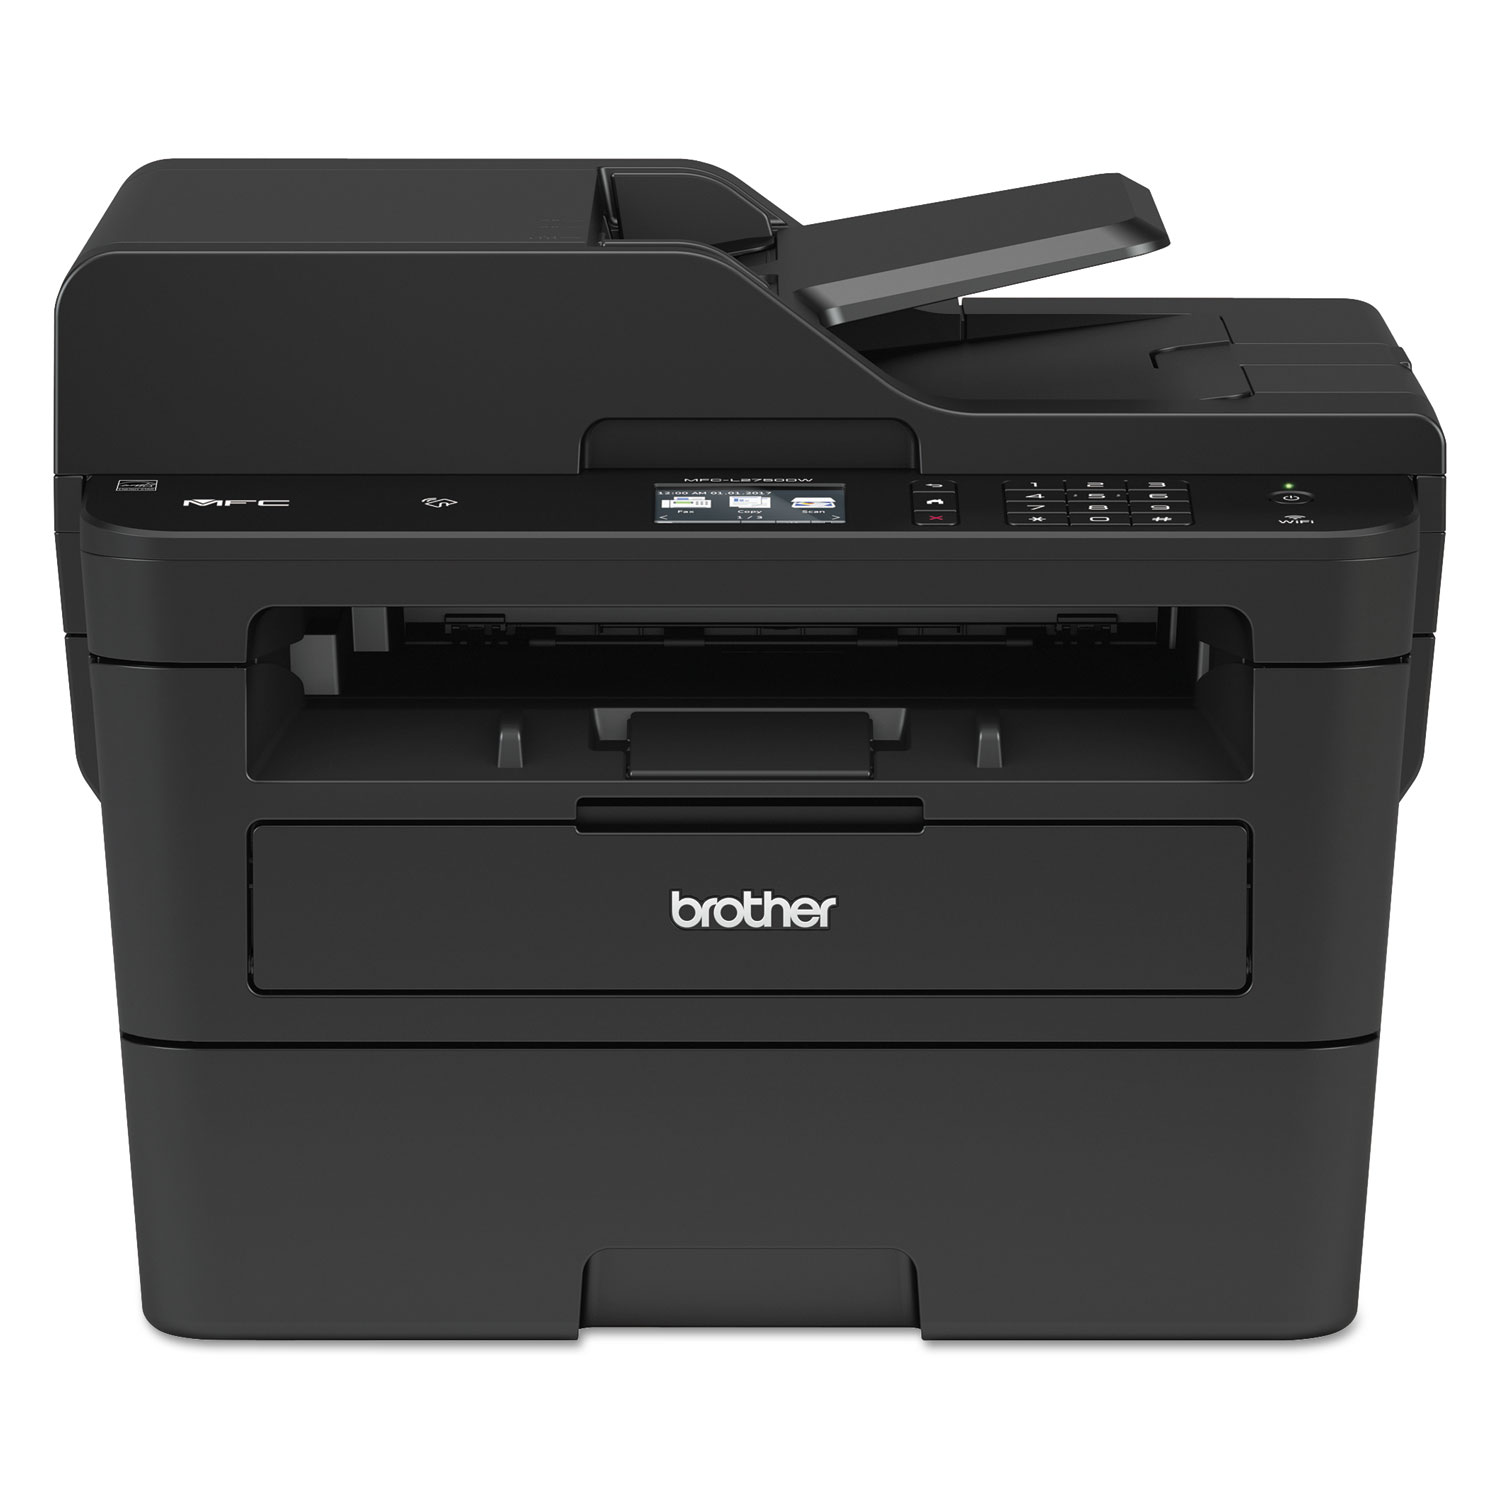 MFC-L2750DW Compact Laser Printer, Copy, Fax, Print, Scan